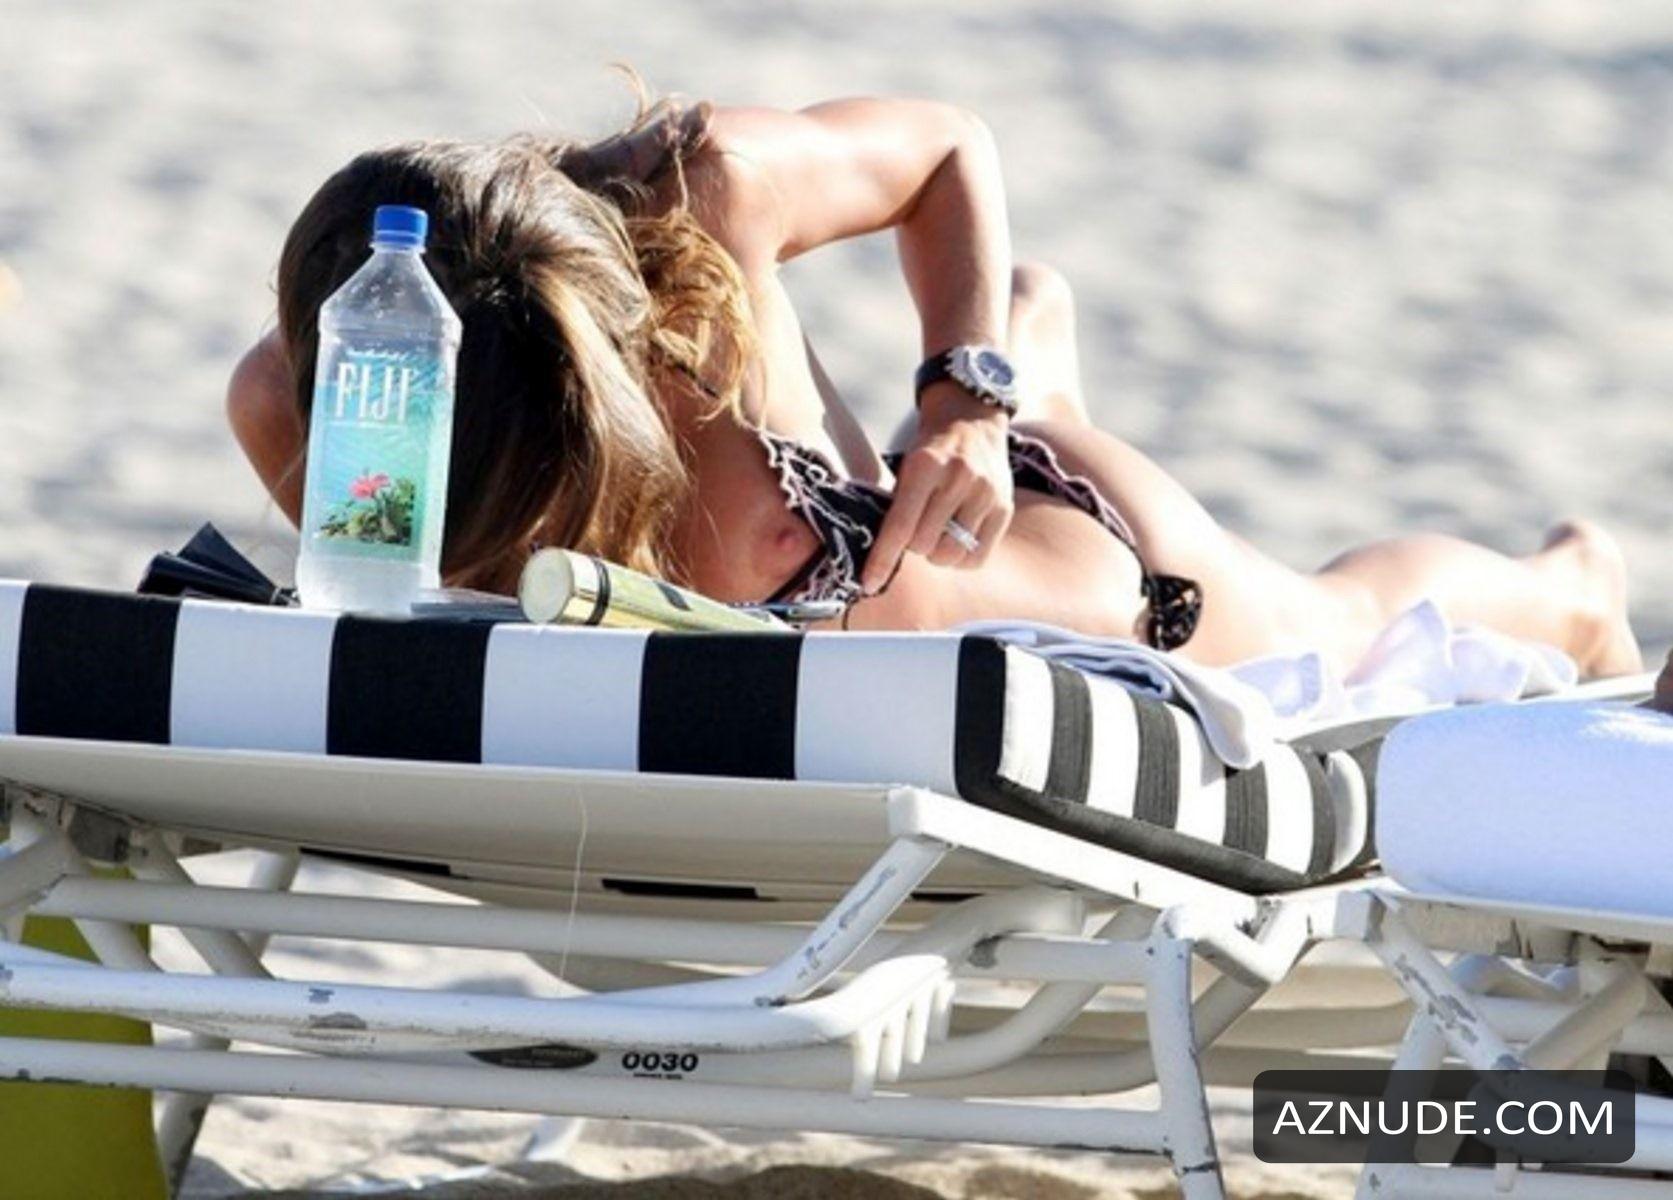  toplessbeachcelebs: Claudia Galanti (Italian Model) boobs  slipping out of bikini in Miami (June 2012)